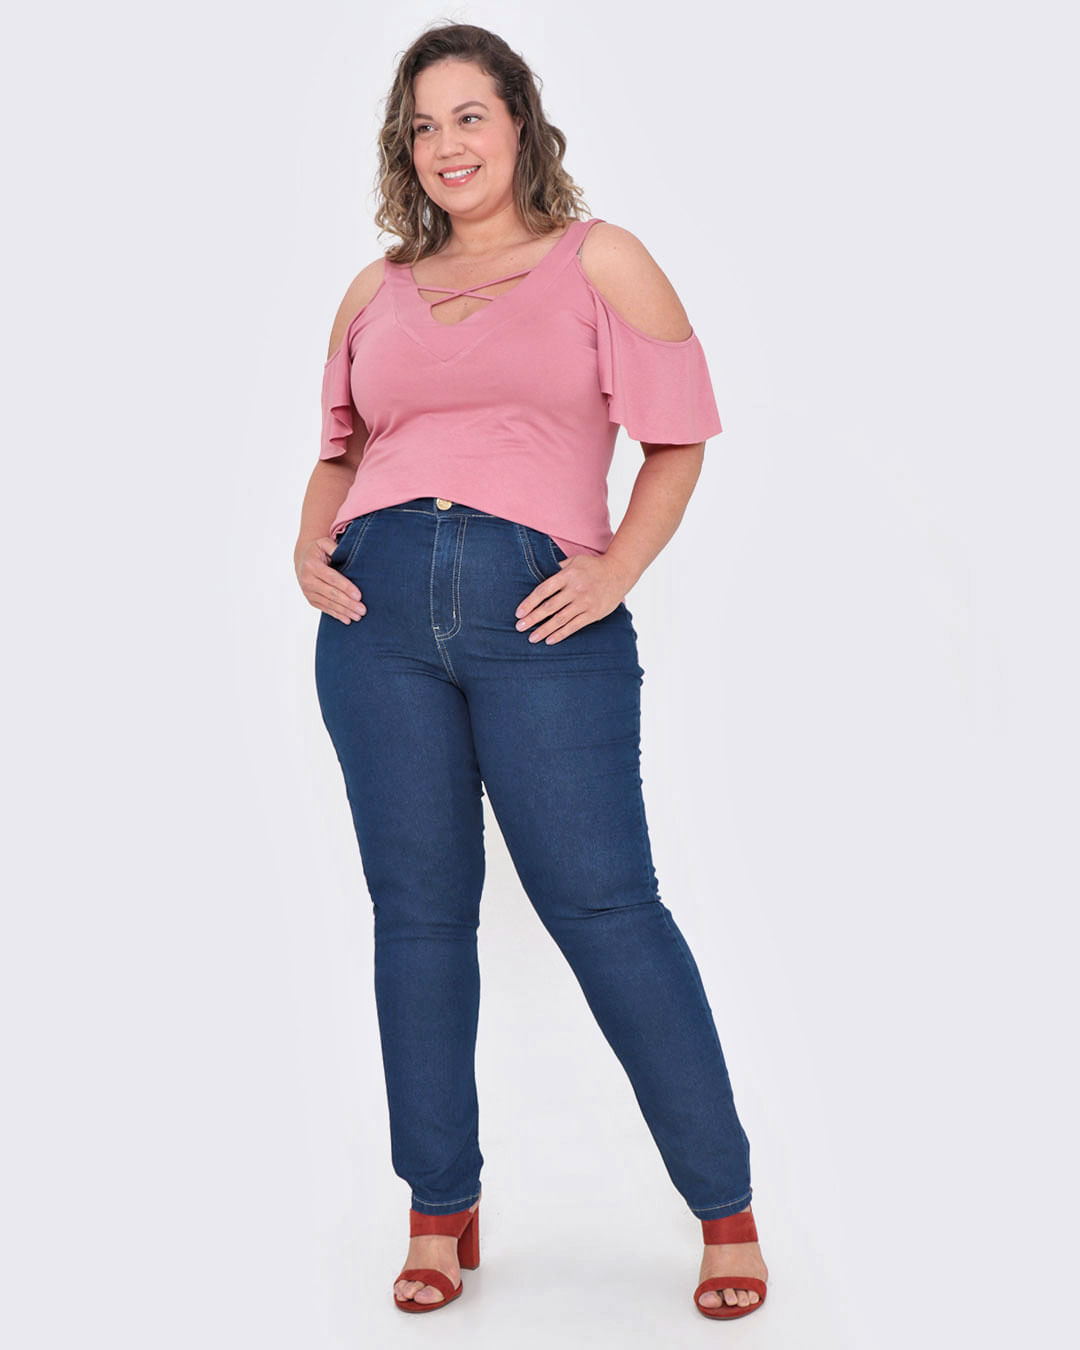 Calca-Jeans-Feminina-Plus-Size-Azul